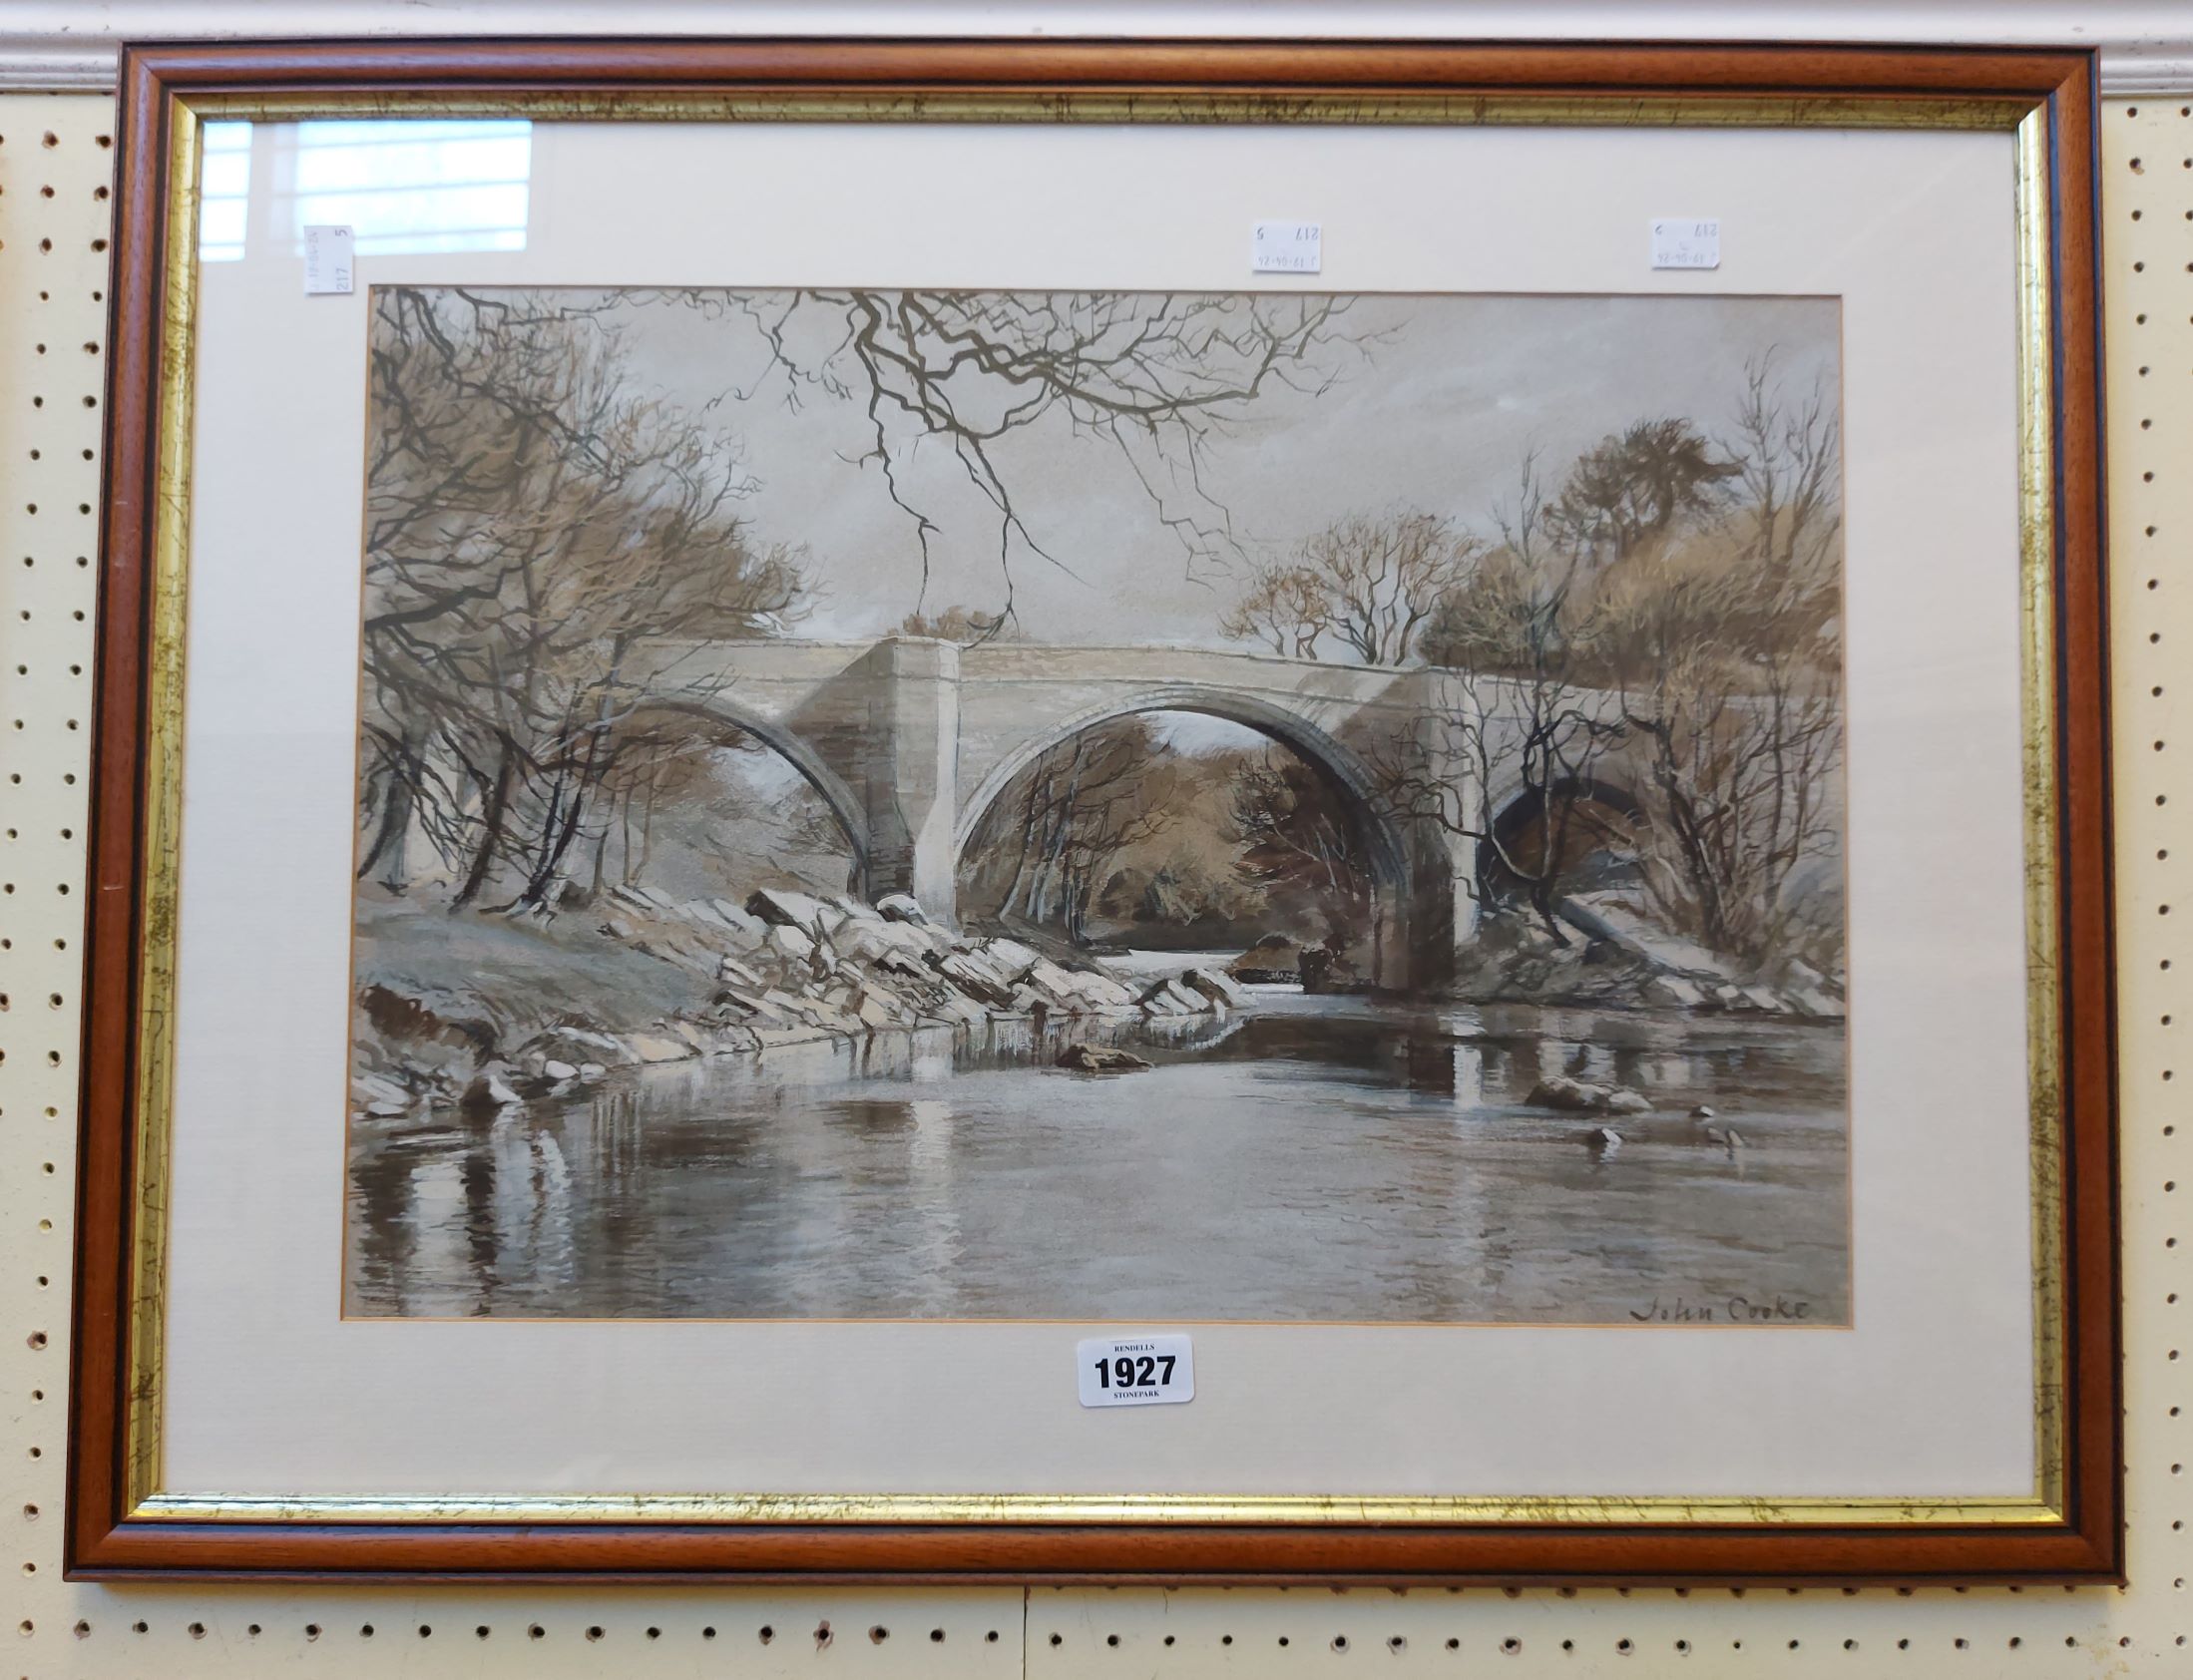 John Cooke: a framed watercolour, depicting a bridge - signed